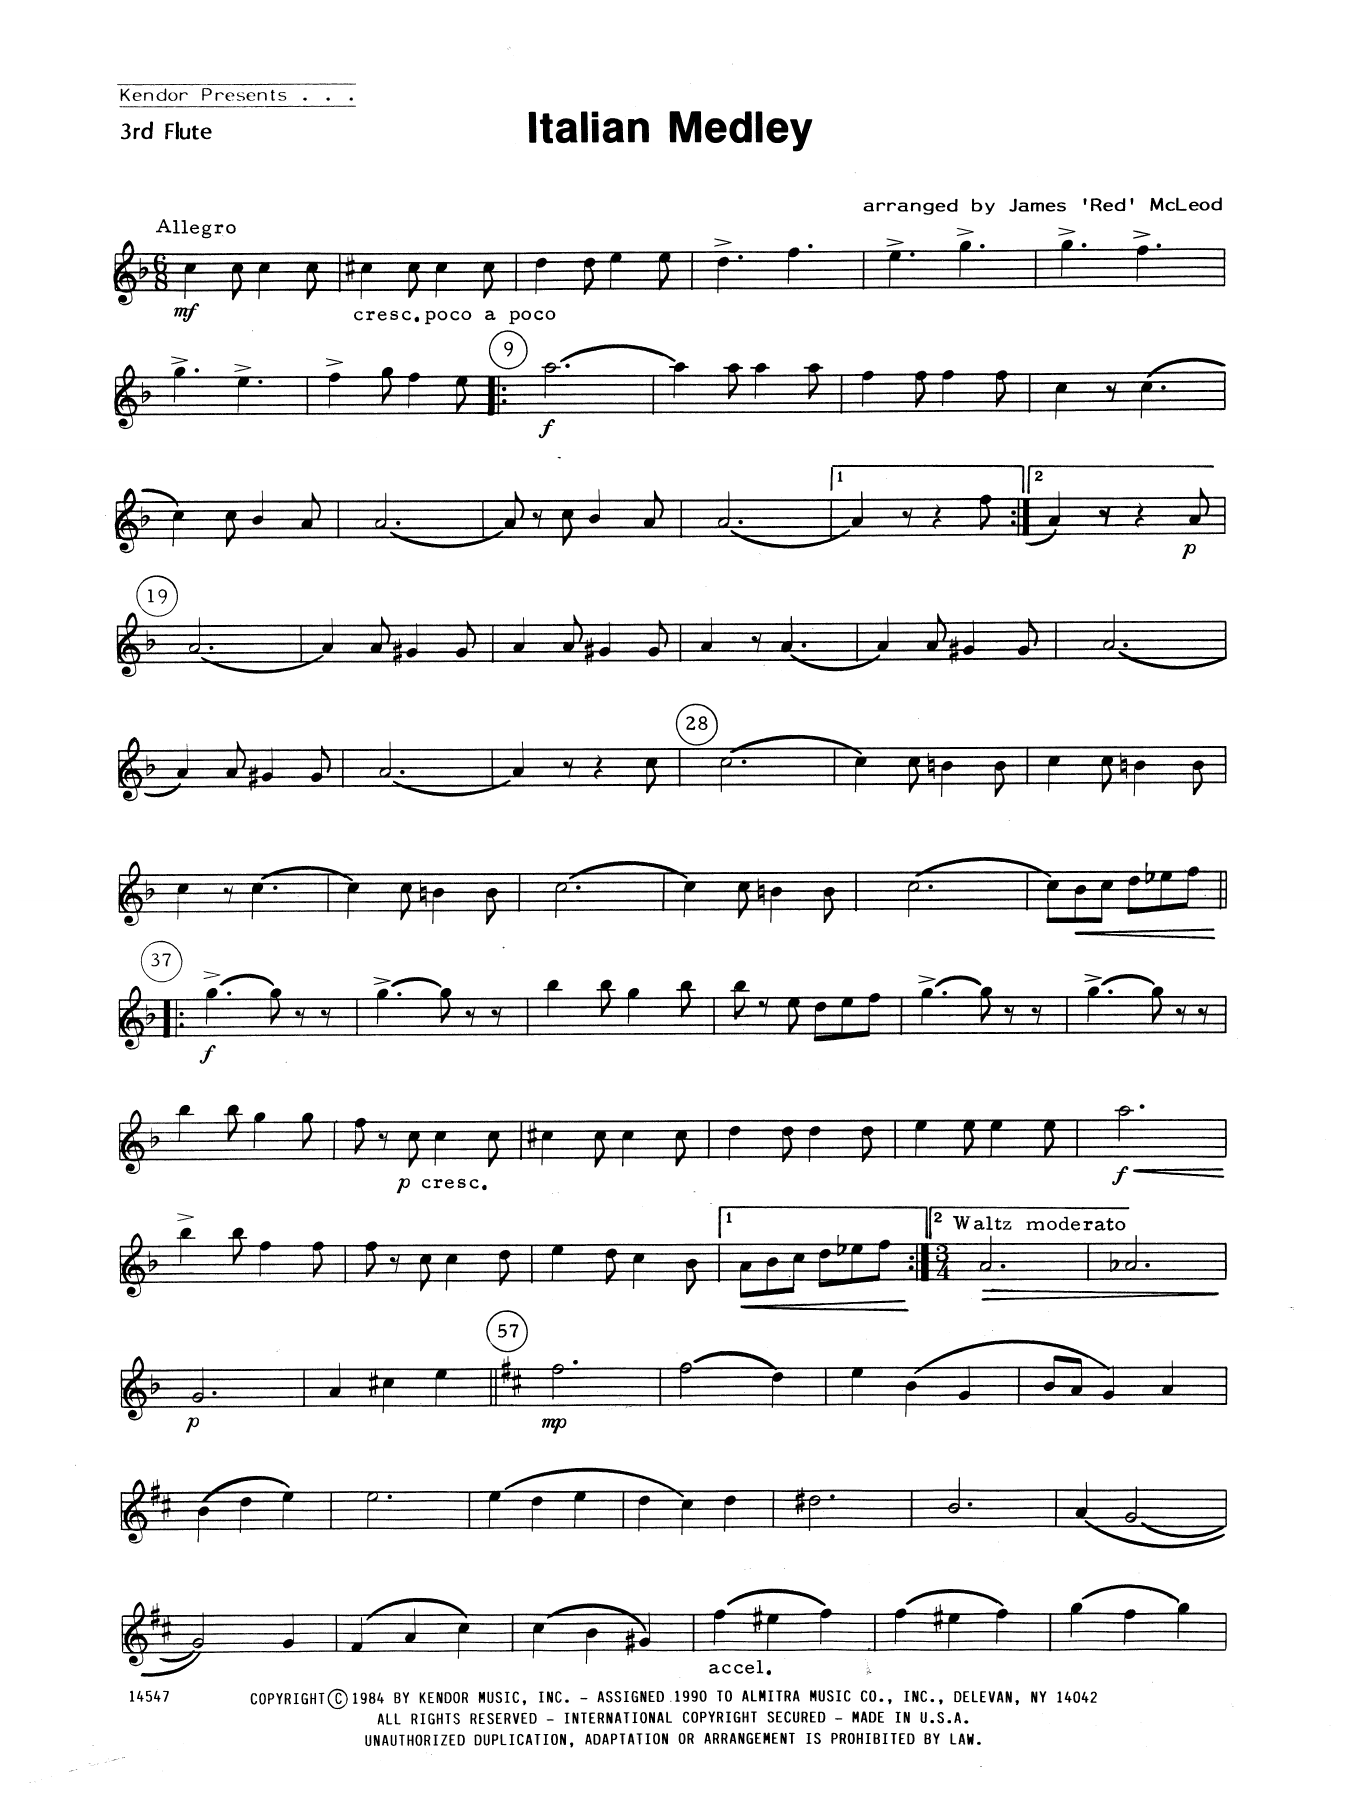 Download James 'Red' McLeod Italian Medley - 3rd C Flute Sheet Music